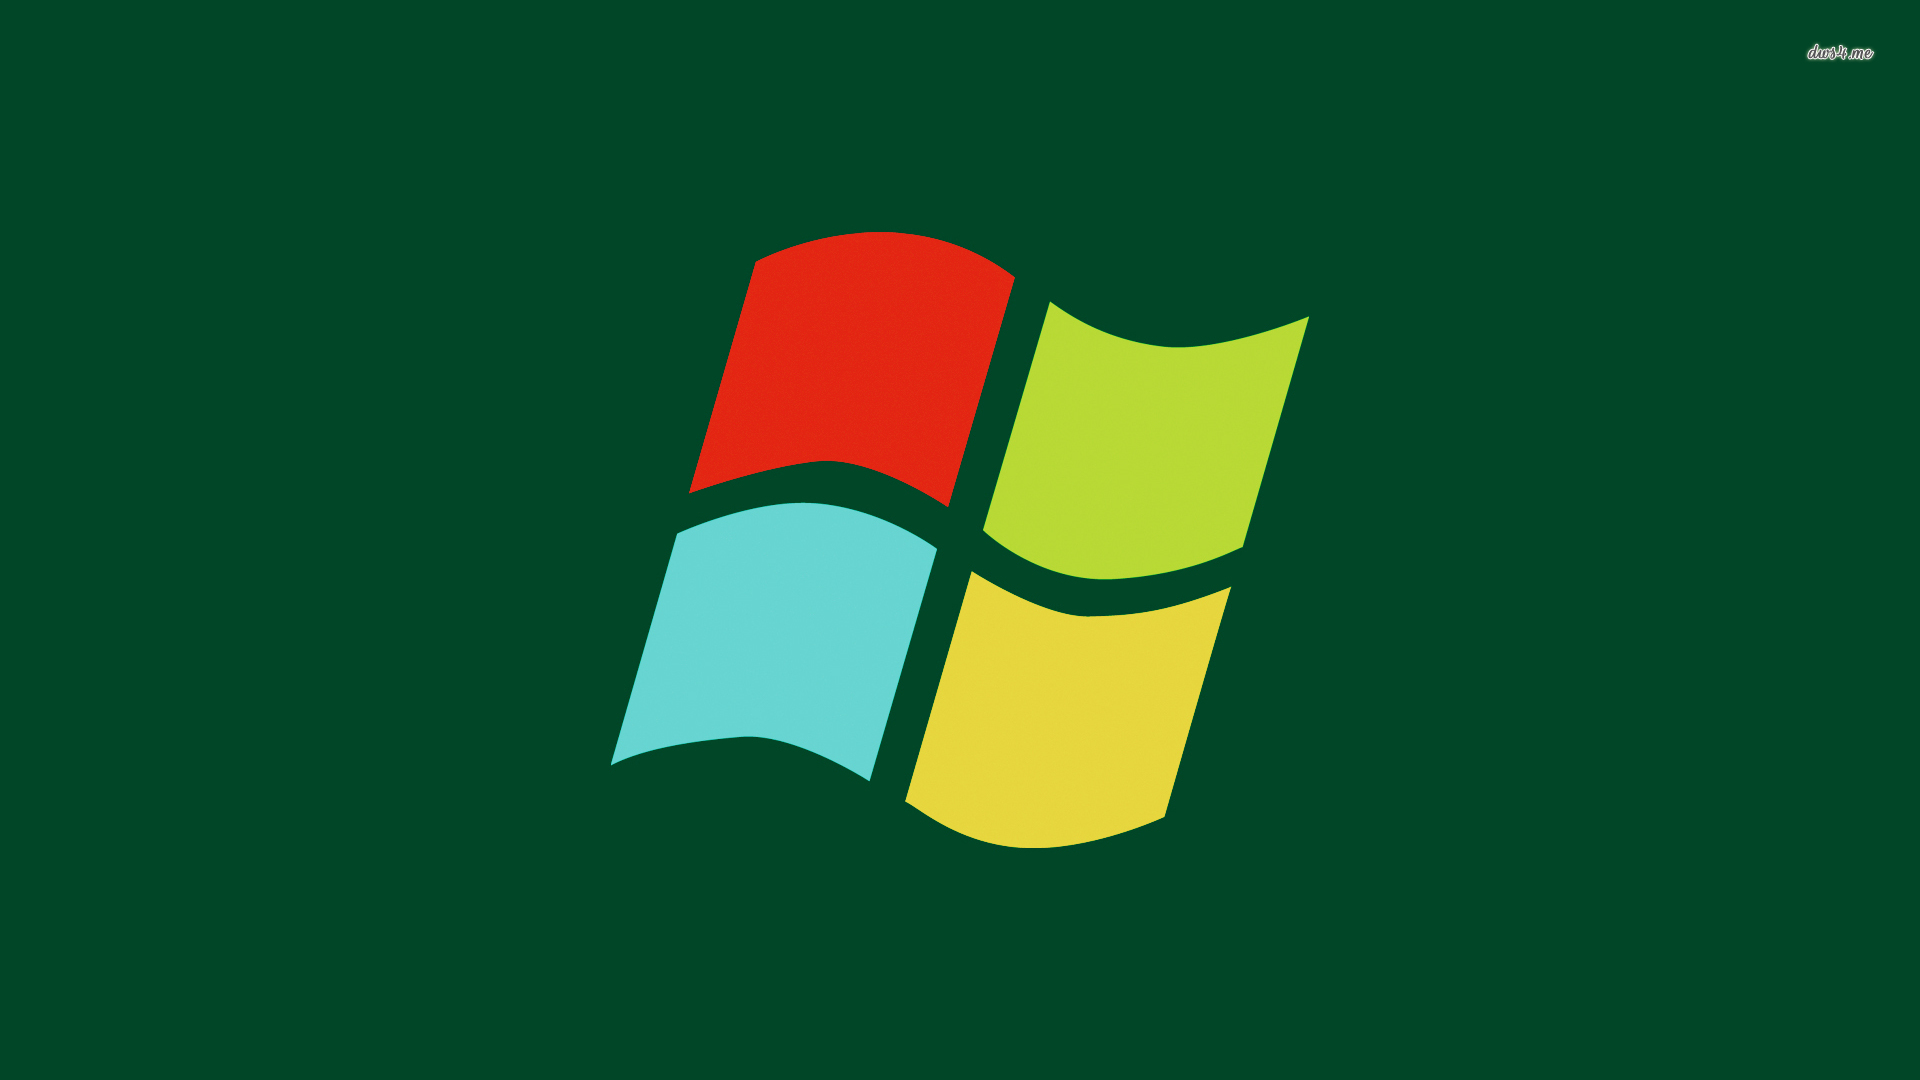 Windows 7 Starter Logo - HD Wallpaper 